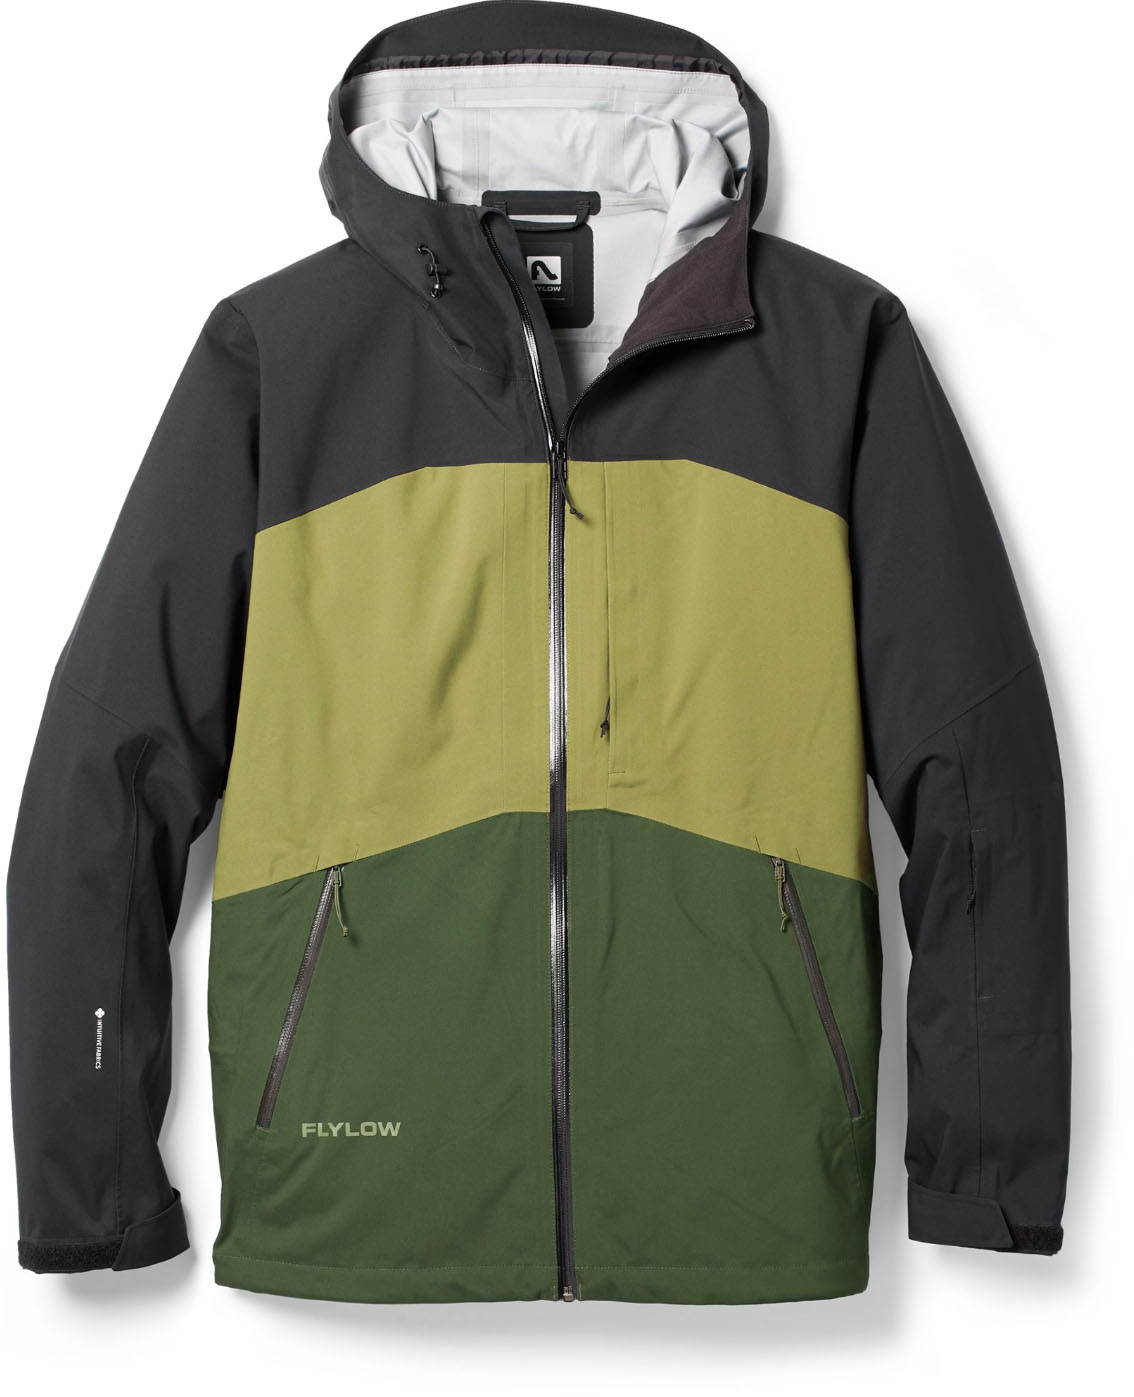 Flylow Gear Malone ski jacket